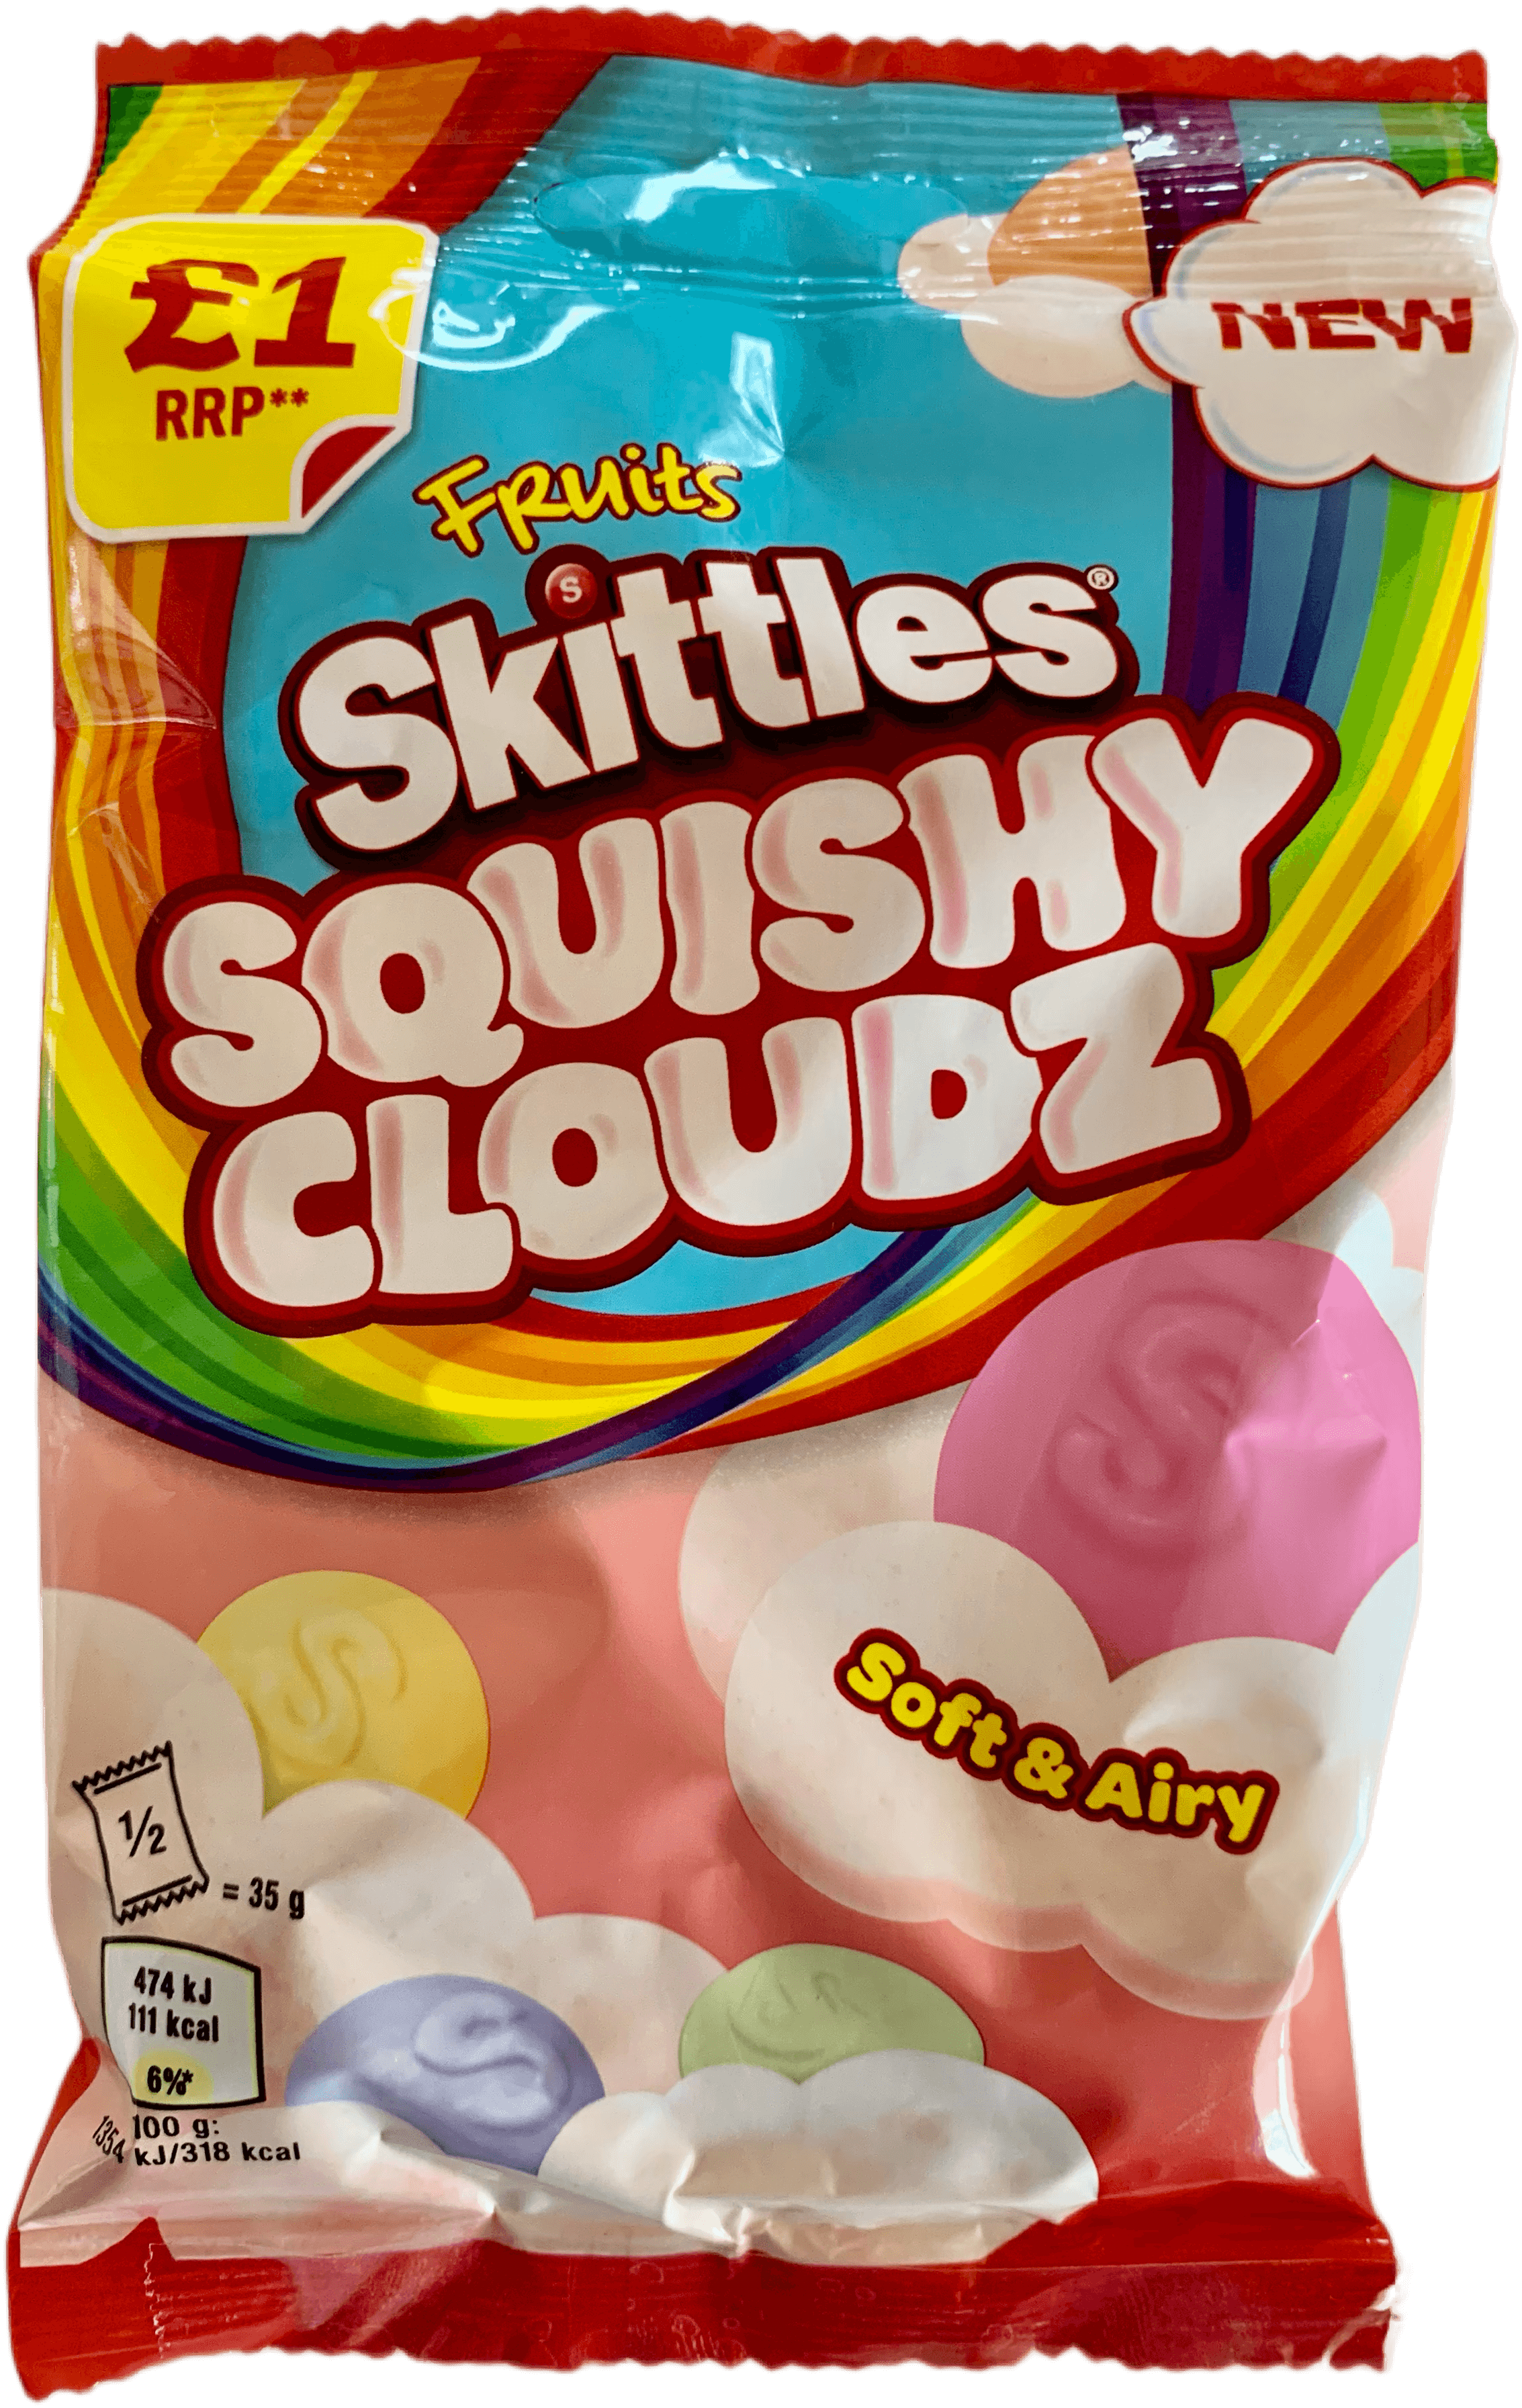 Skittles Squishy Cloudz original